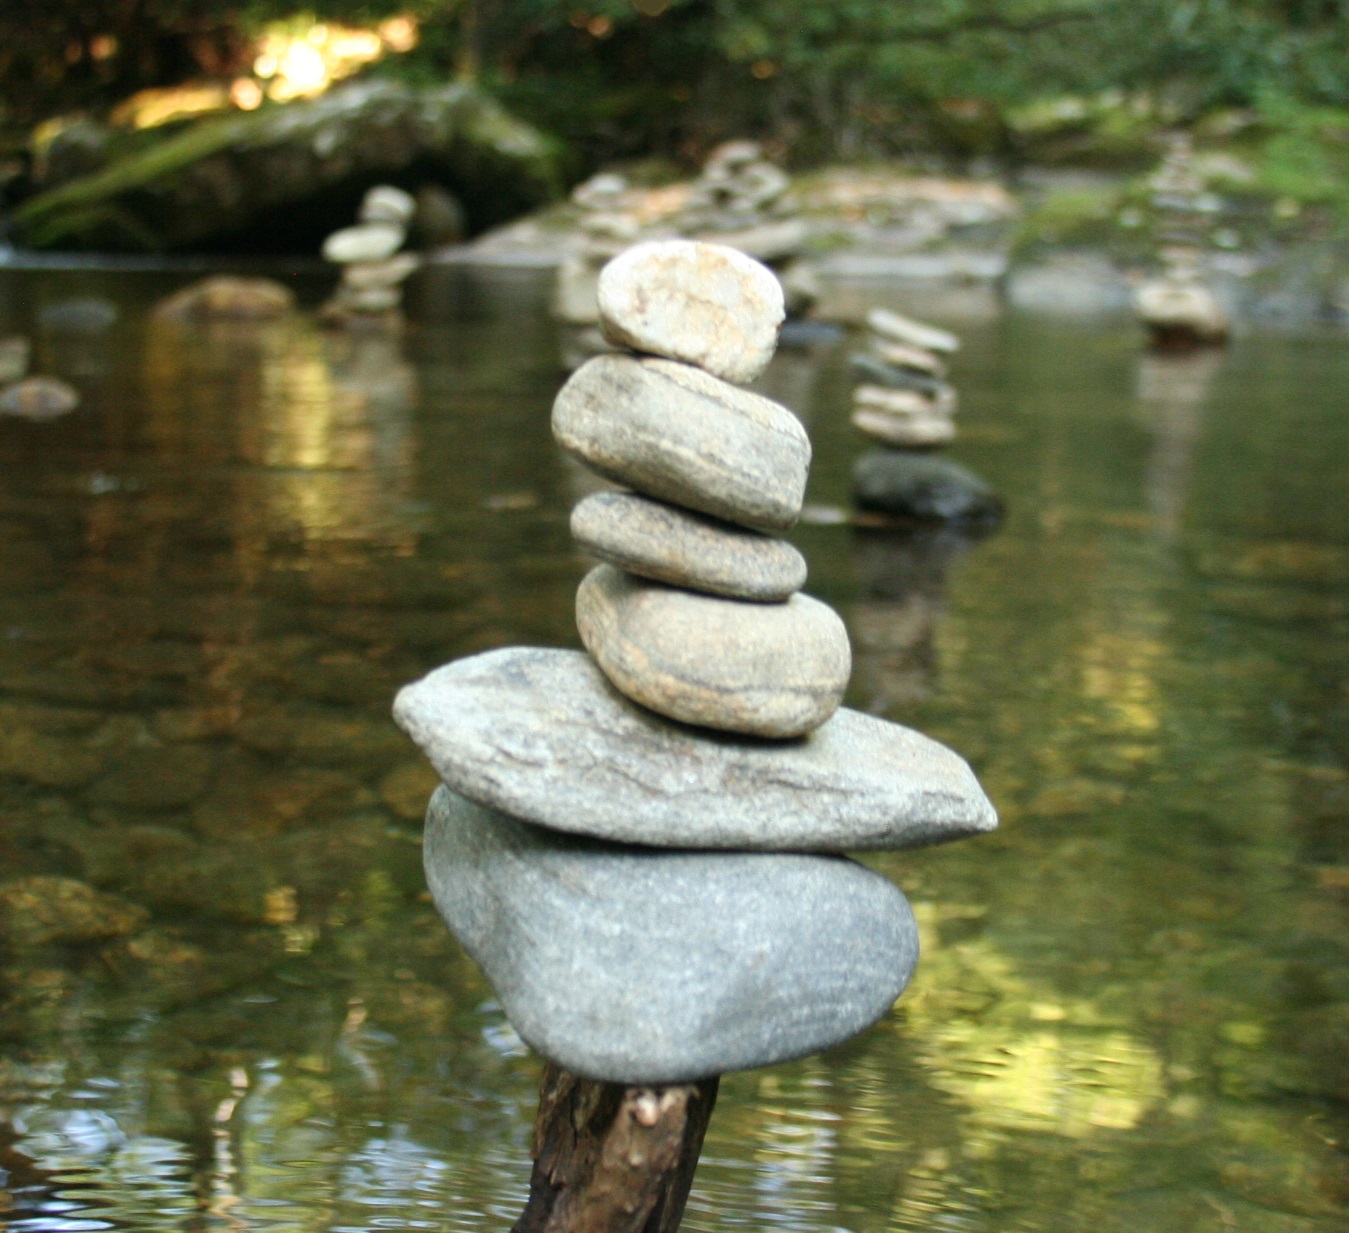 Pisgah_National_Forest_(balanced_rocks_over_stream)